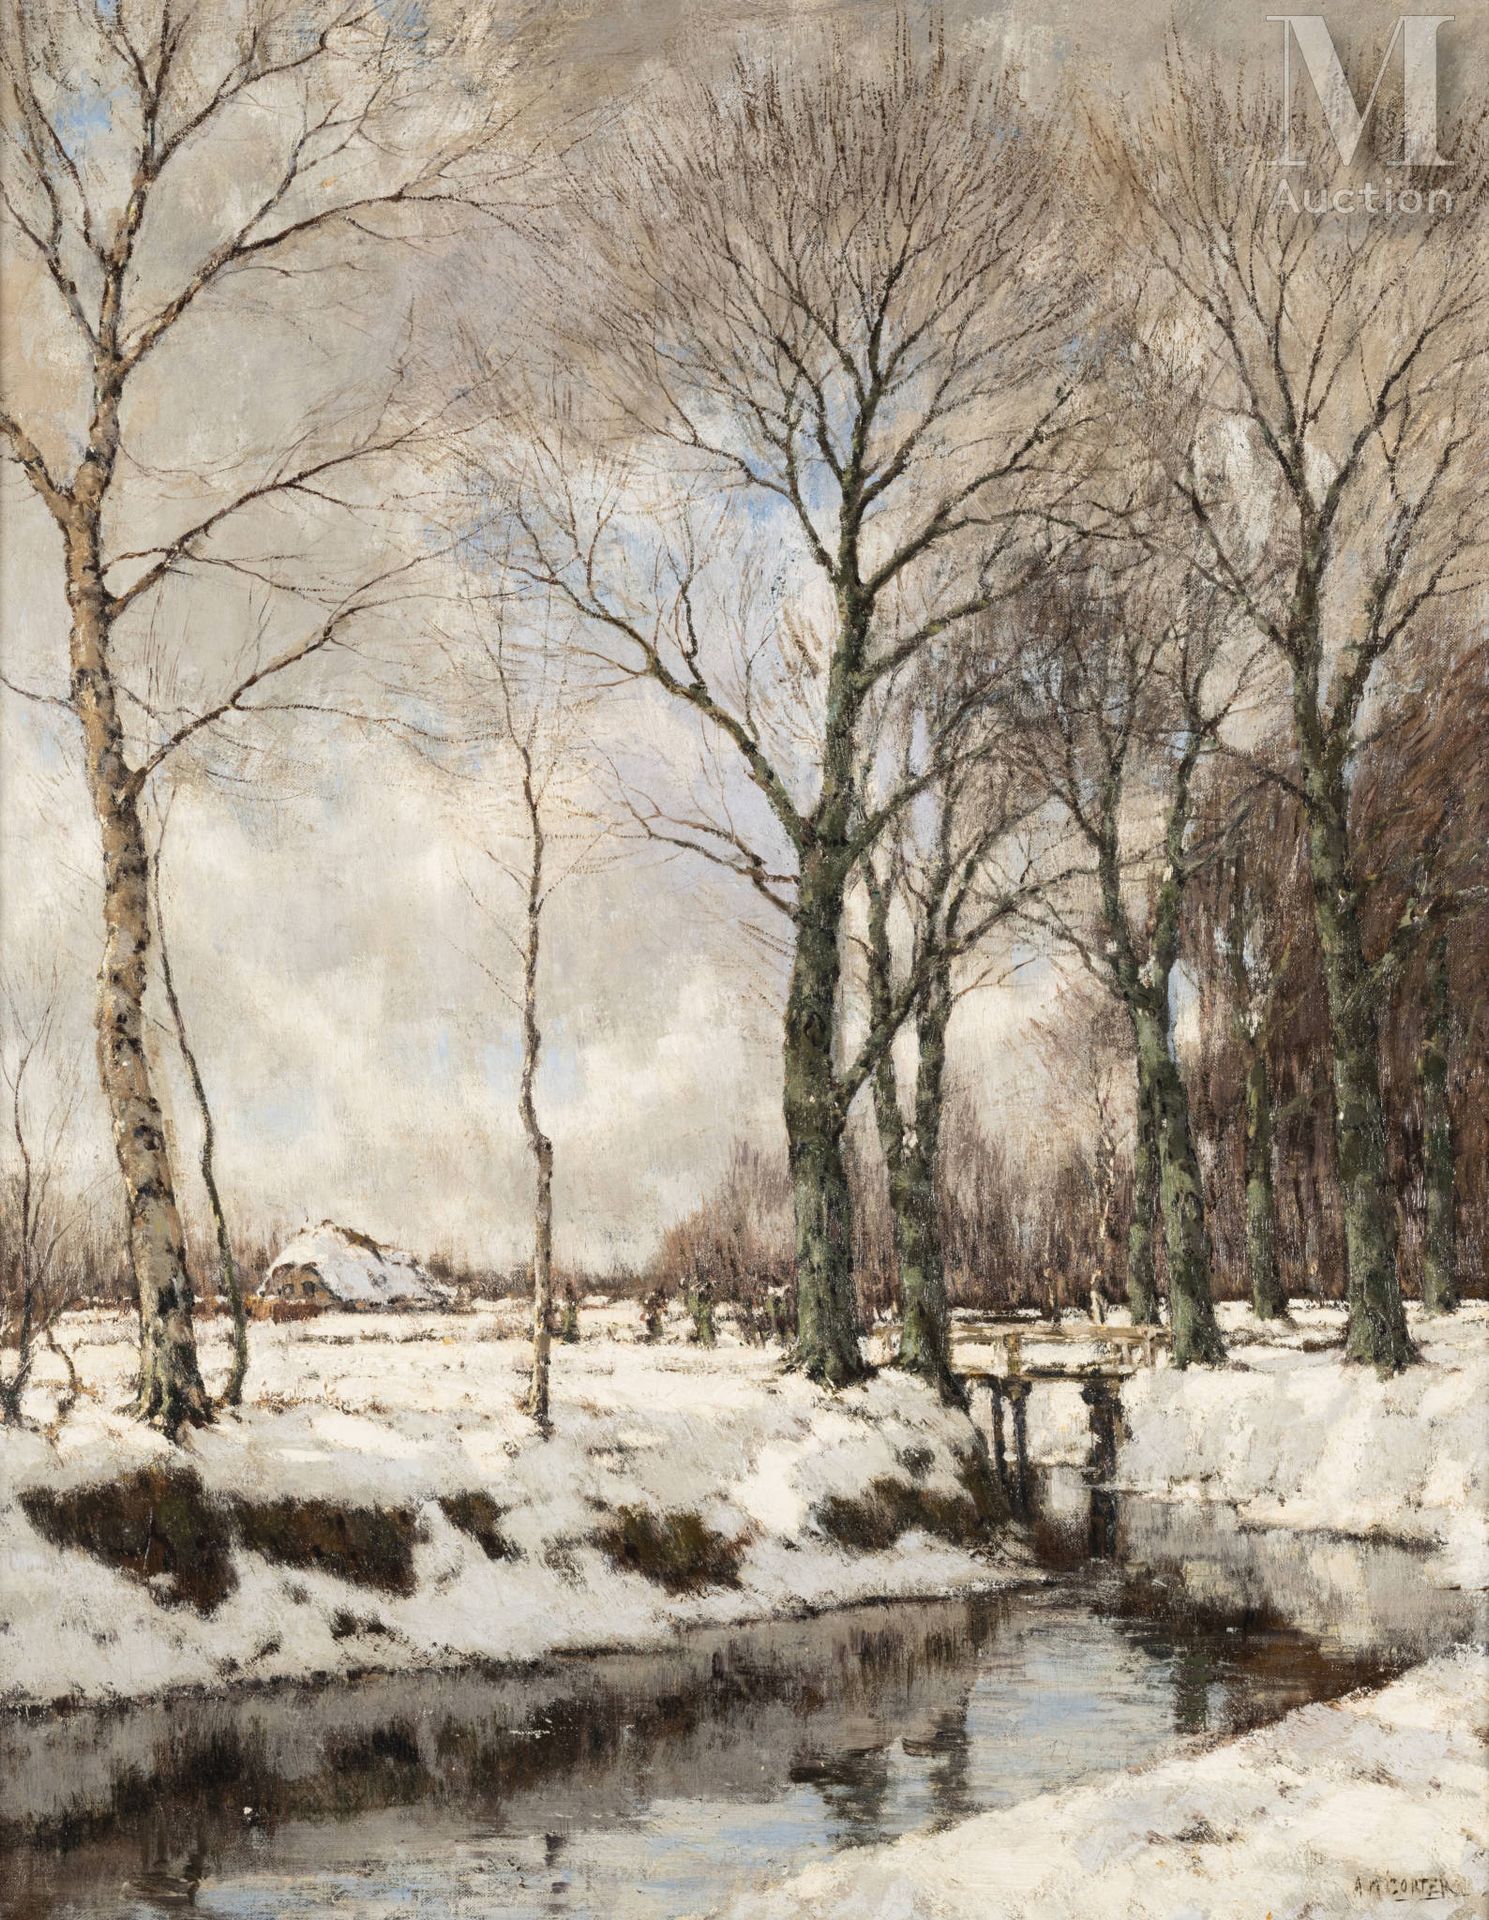 Arnold Marc GORTER (1866-1933) 雪景

原创布面油画
94 x 73 cm
签名右下：A.MGorter